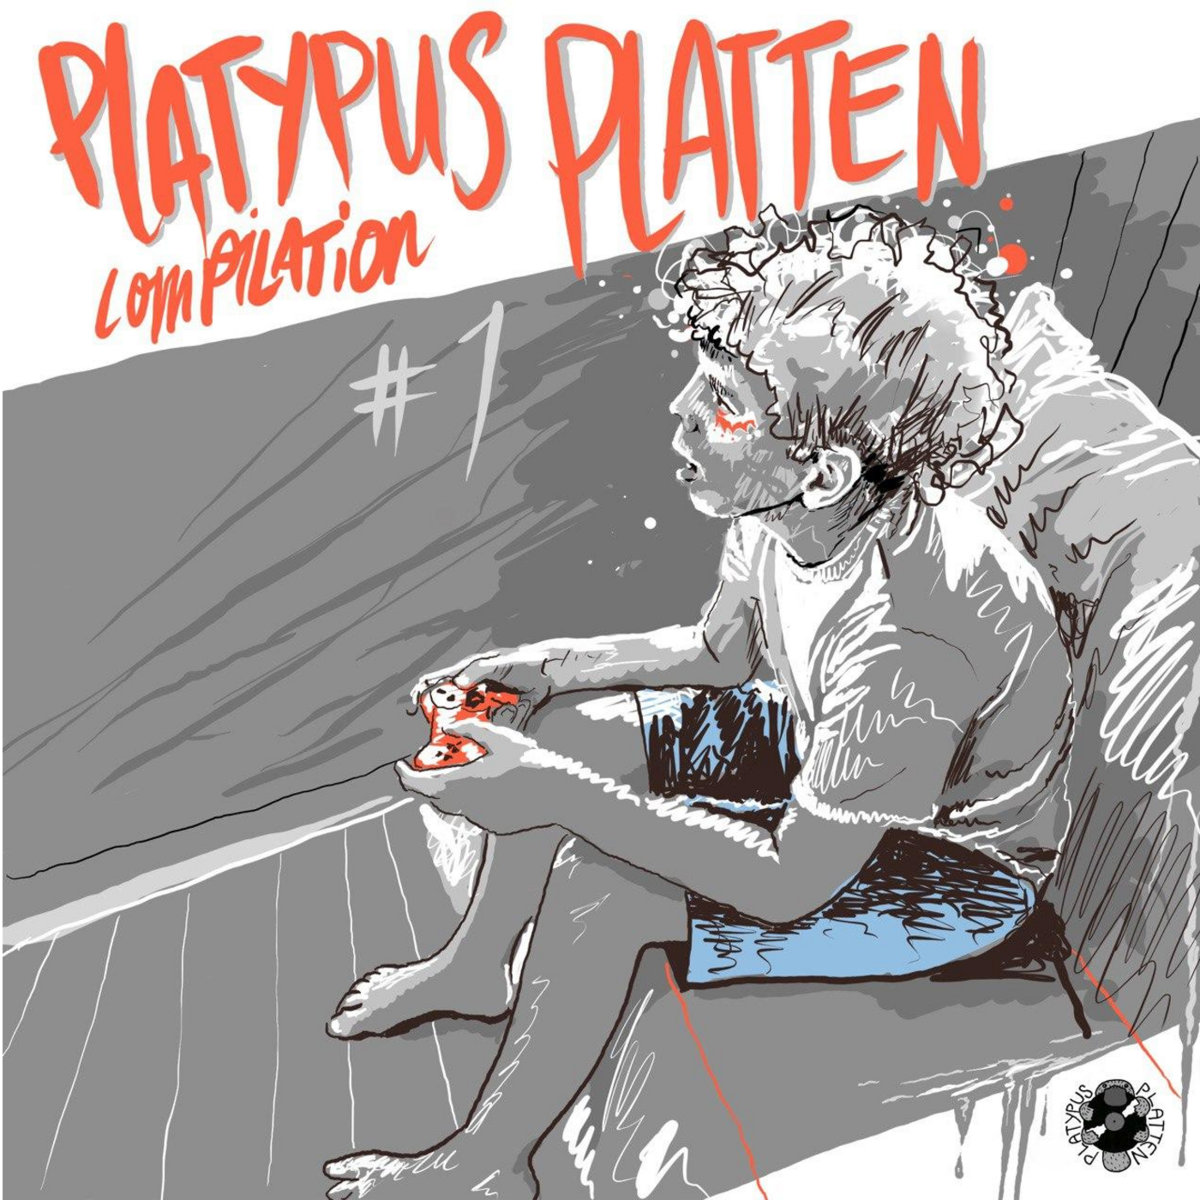 Platypus Platten cover